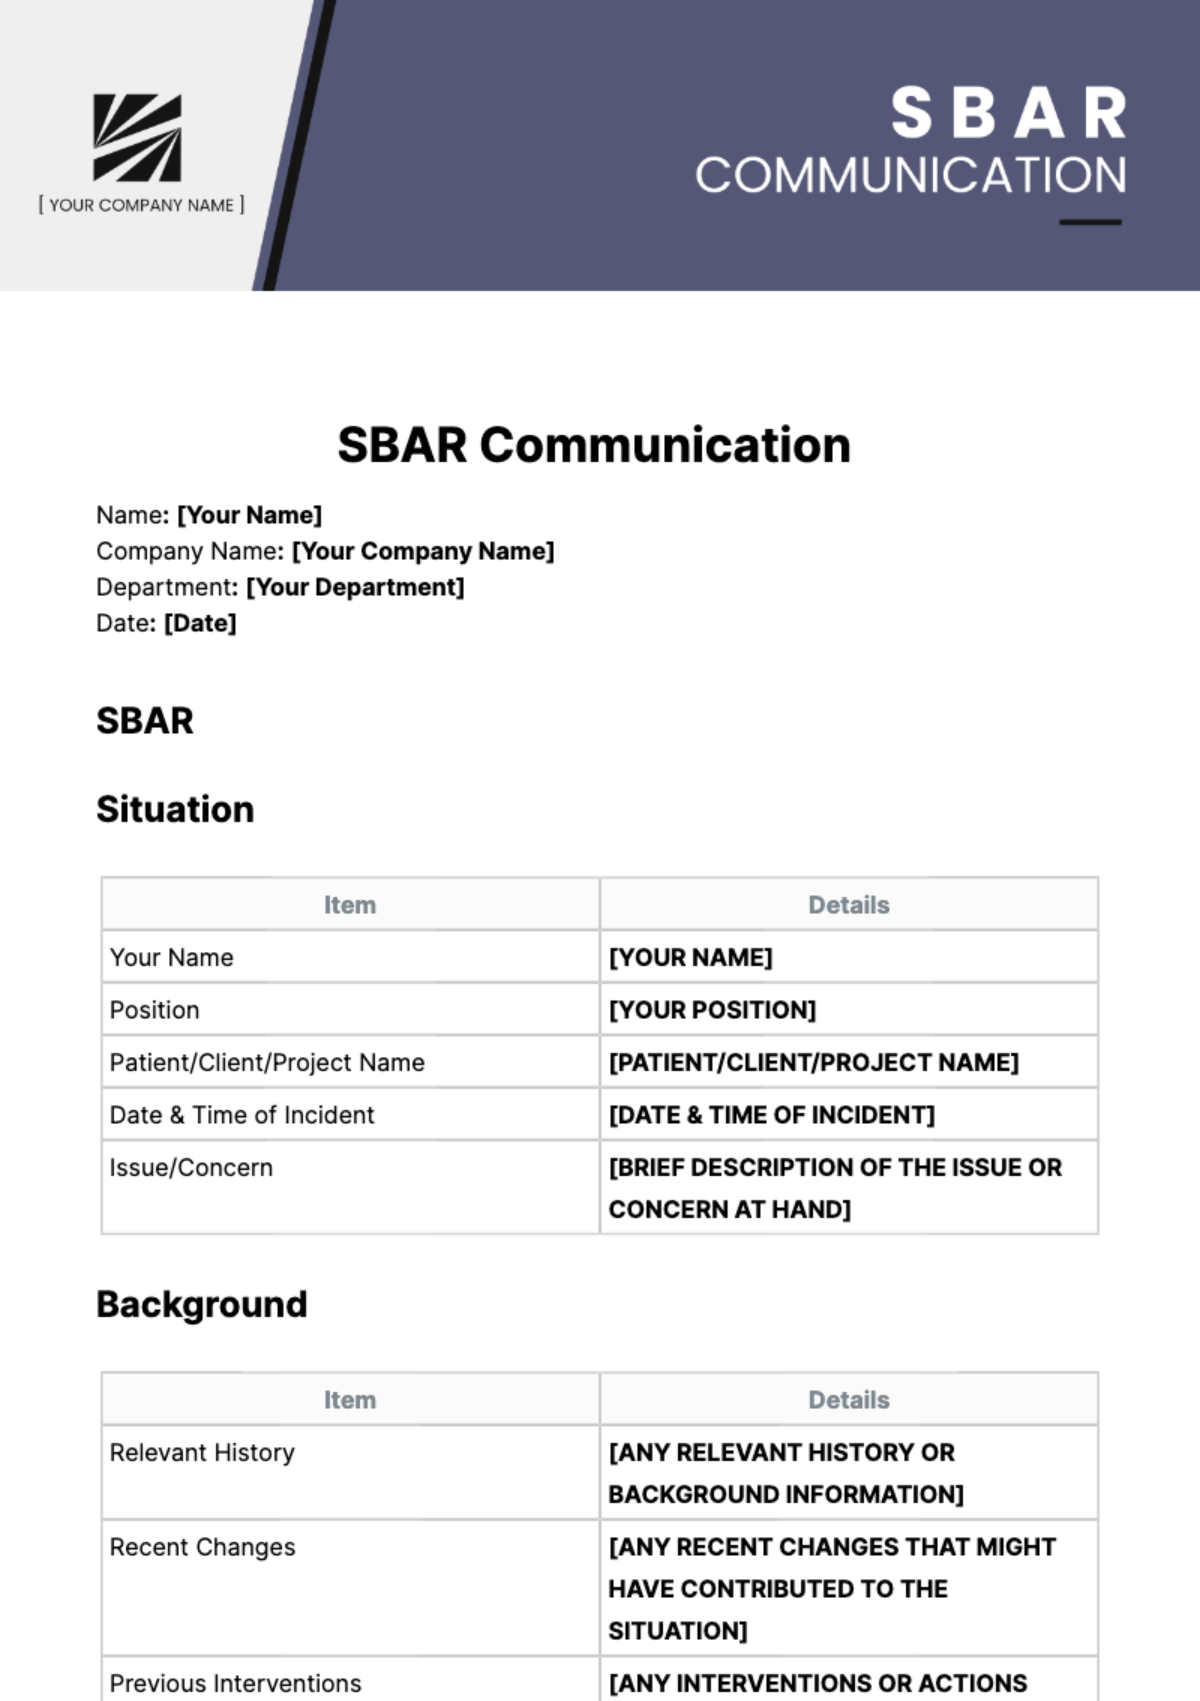 SBAR Communication Template